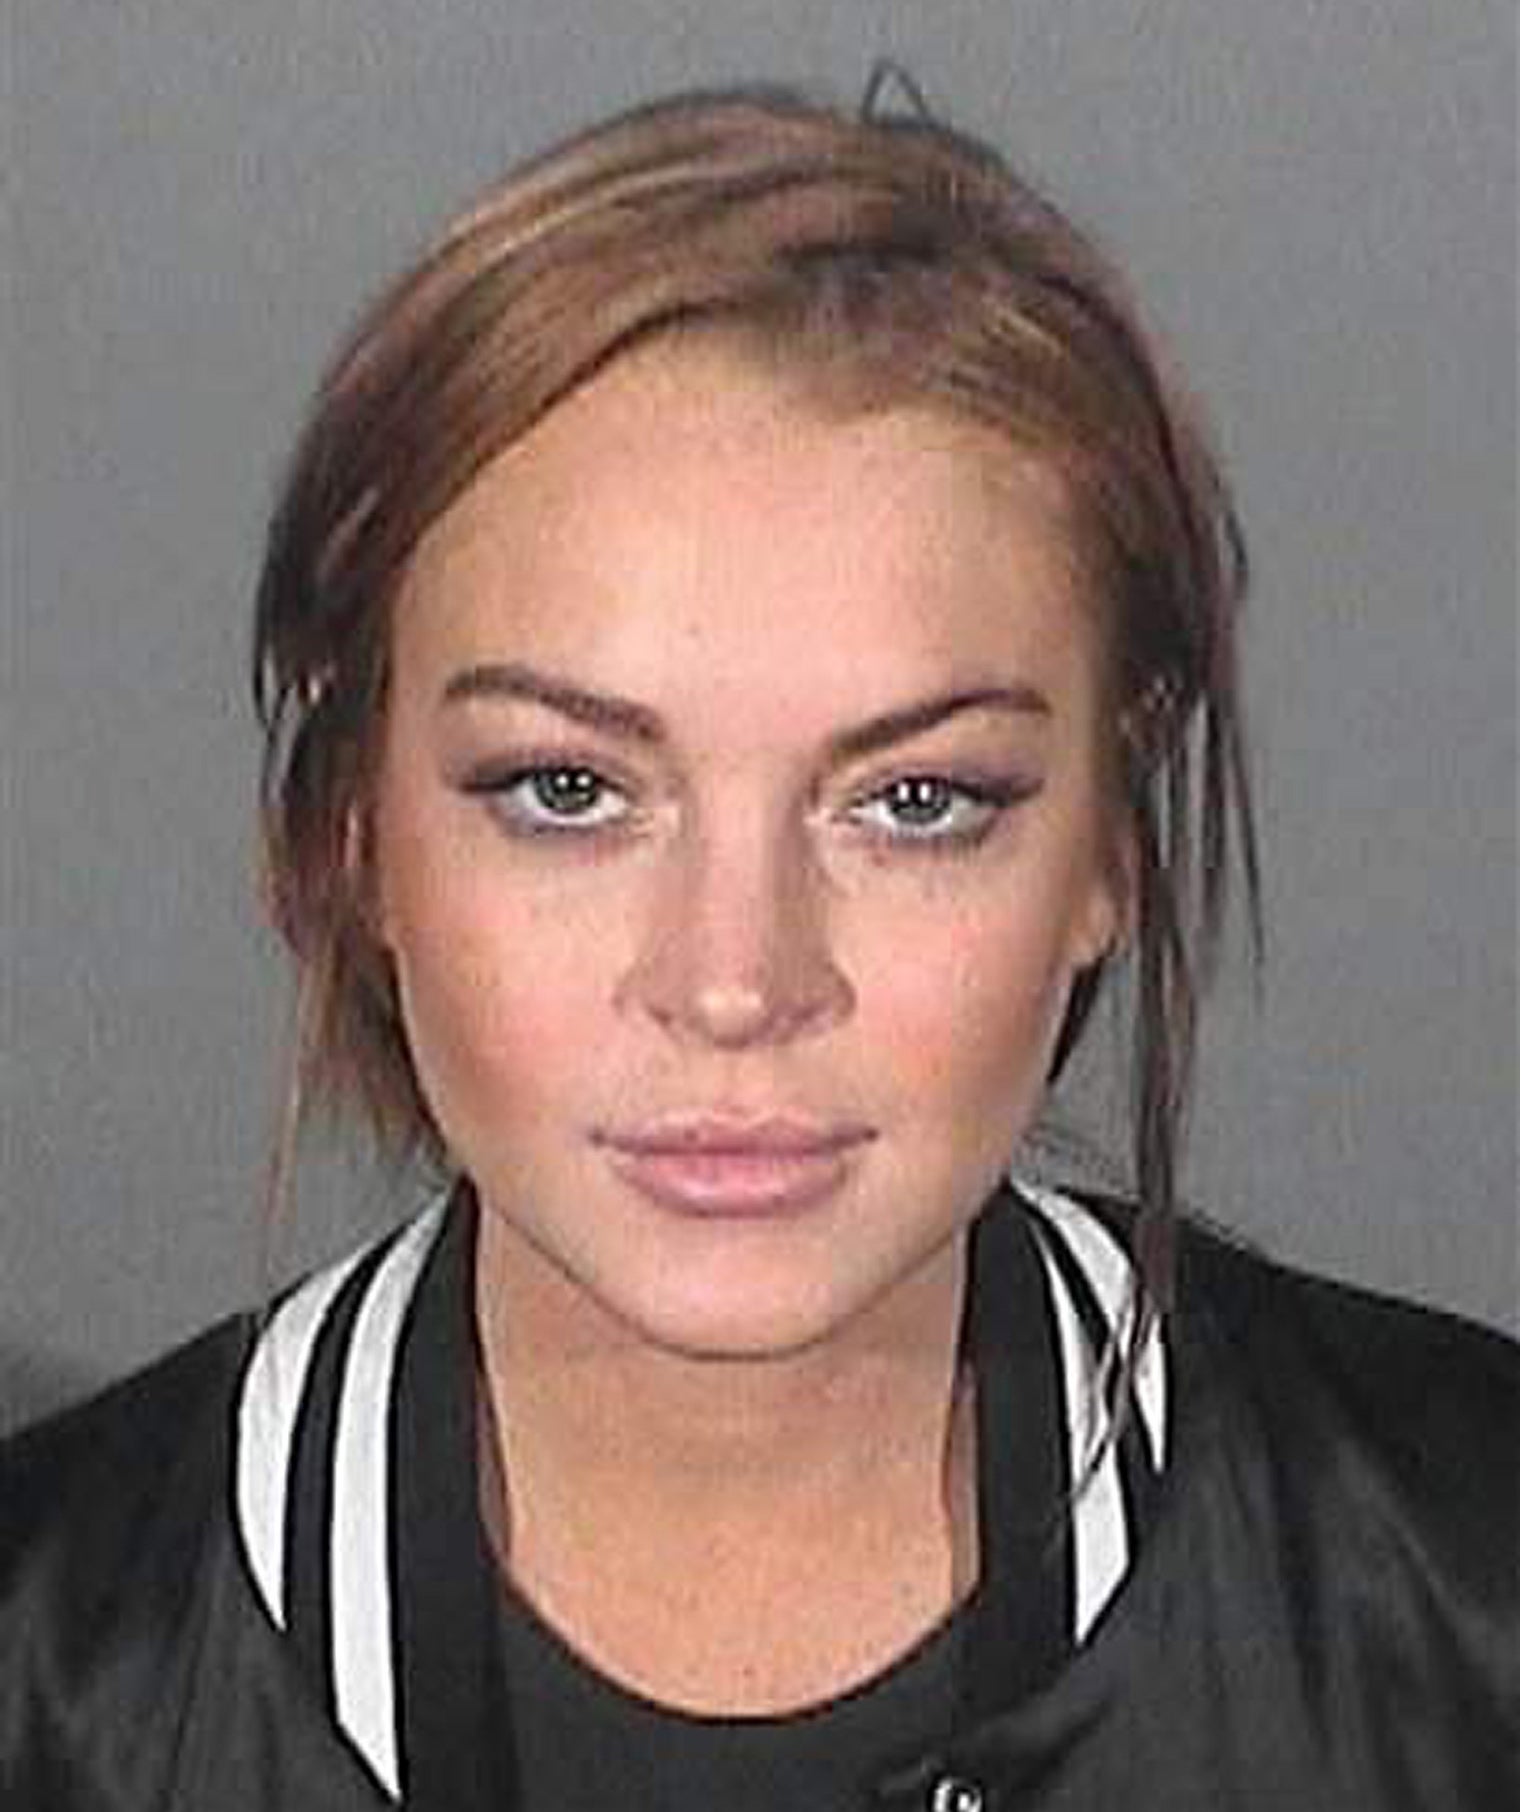 Booking photo mugshot of Lindsay Lohan, Santa Monica Police Department, California, 19 Mar 2013.